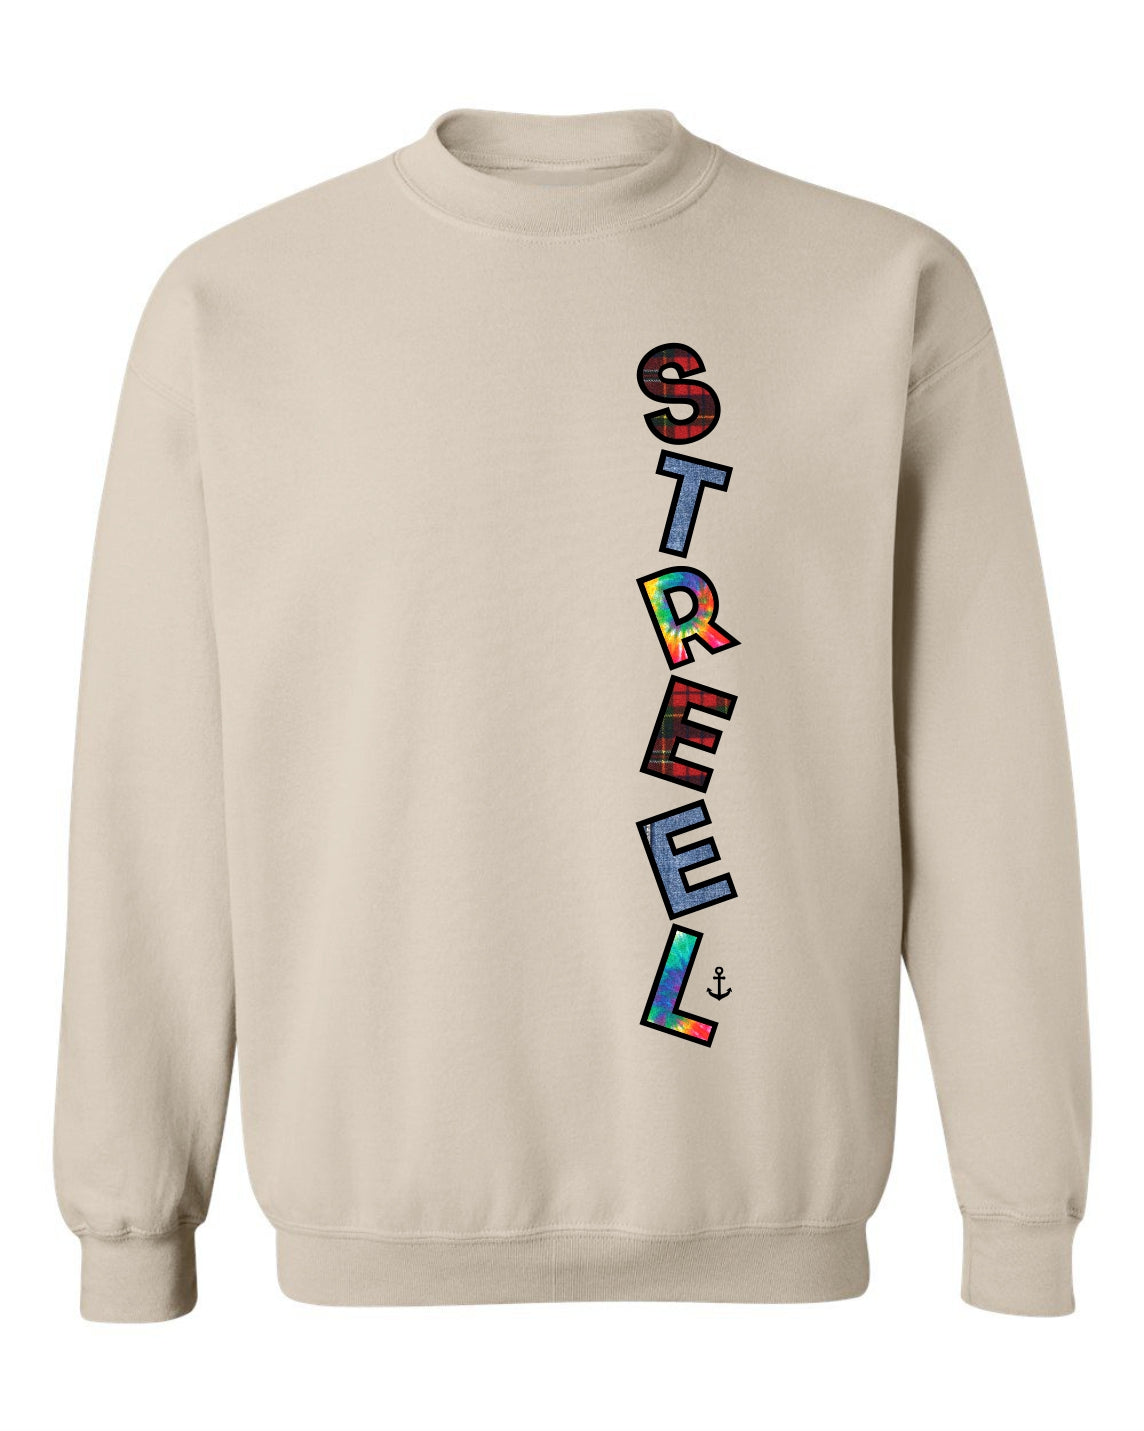 "Streel" Patterns Unisex Crewneck Sweatshirt